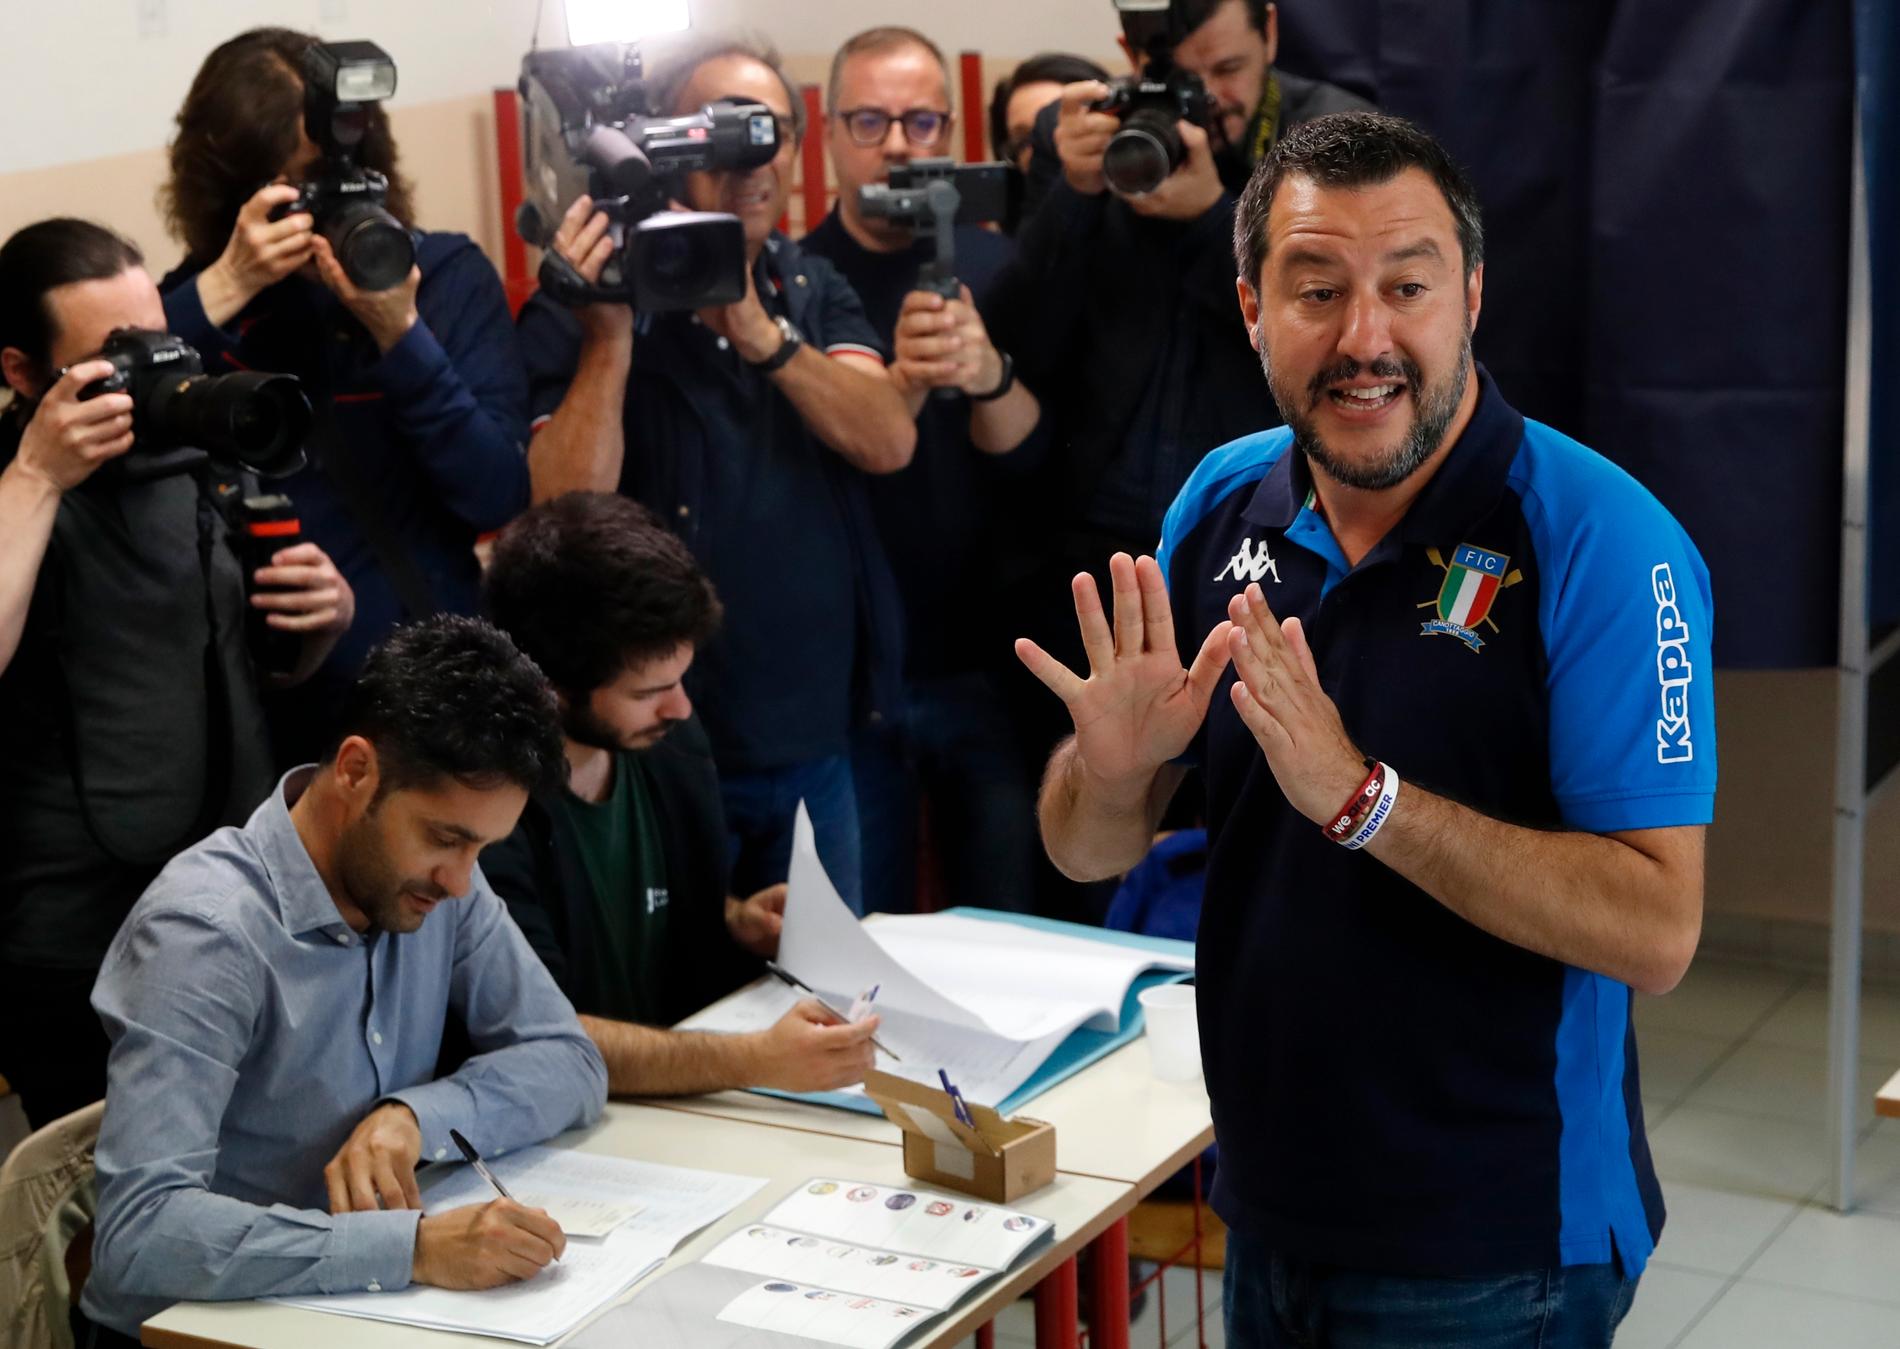 Lega-ledaren Matteo Salvini la sin röst i Milano under söndagen.